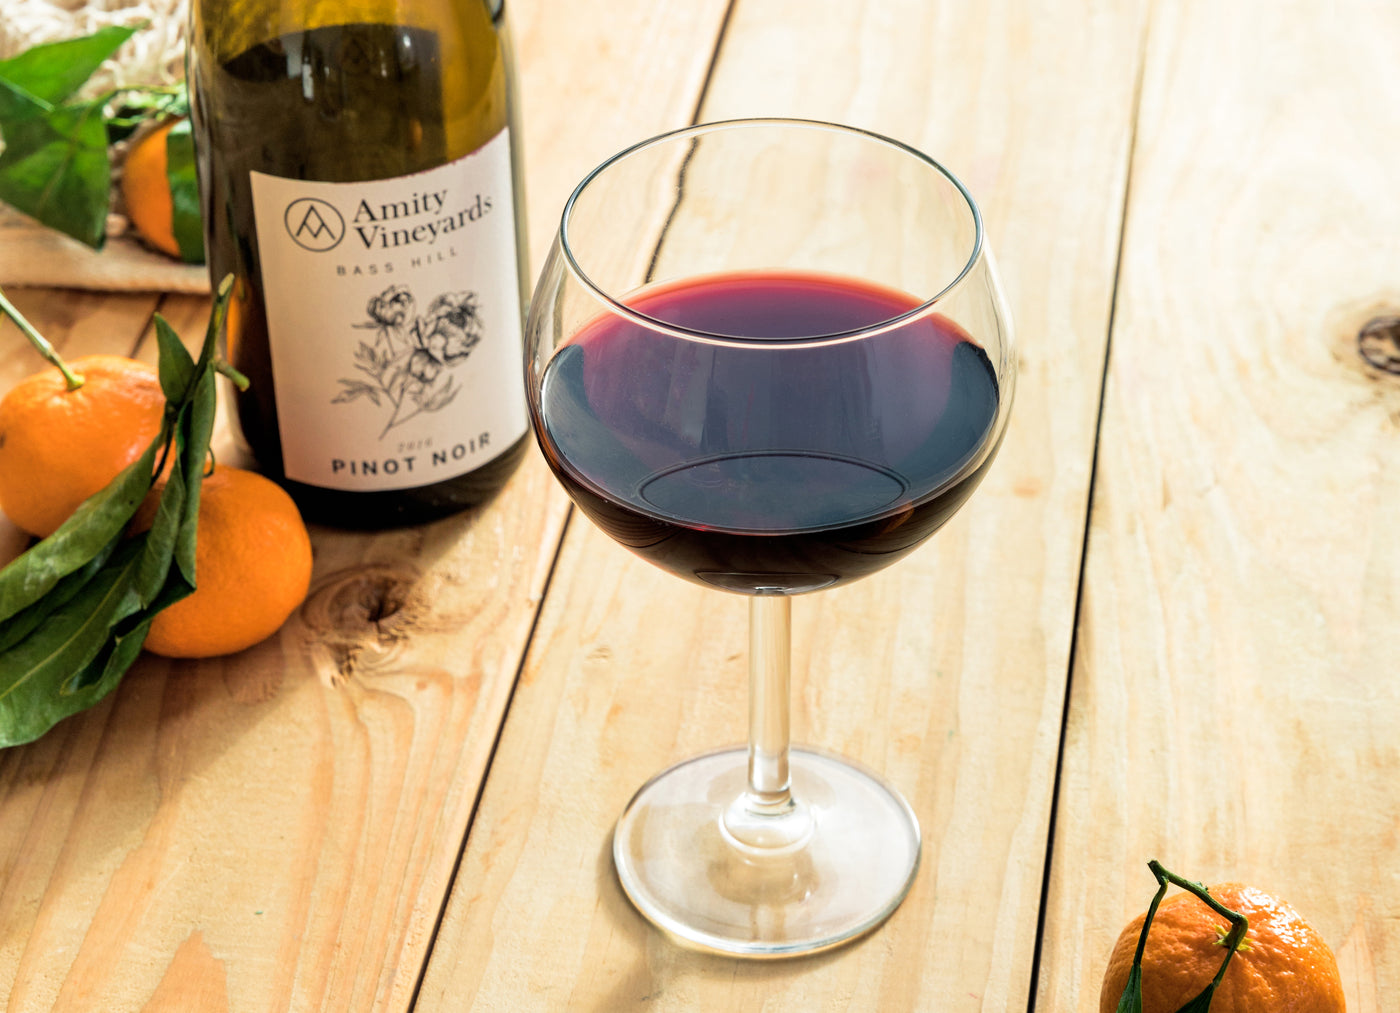 Amity Vineyards Pinot Noir